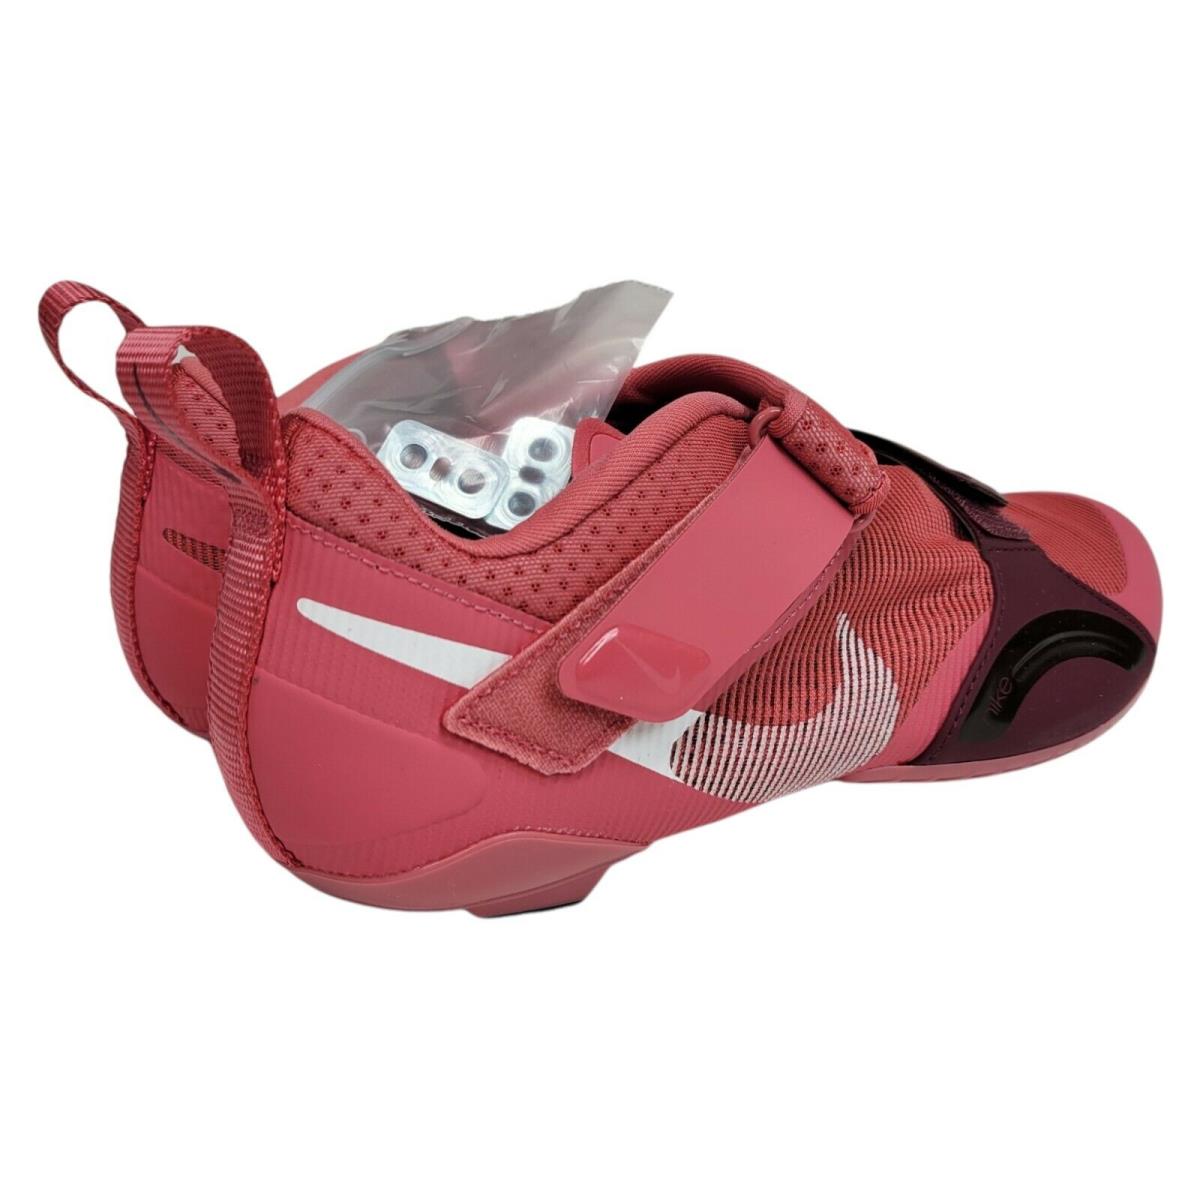 Nike shoes SuperRep Cycle - Pink 5